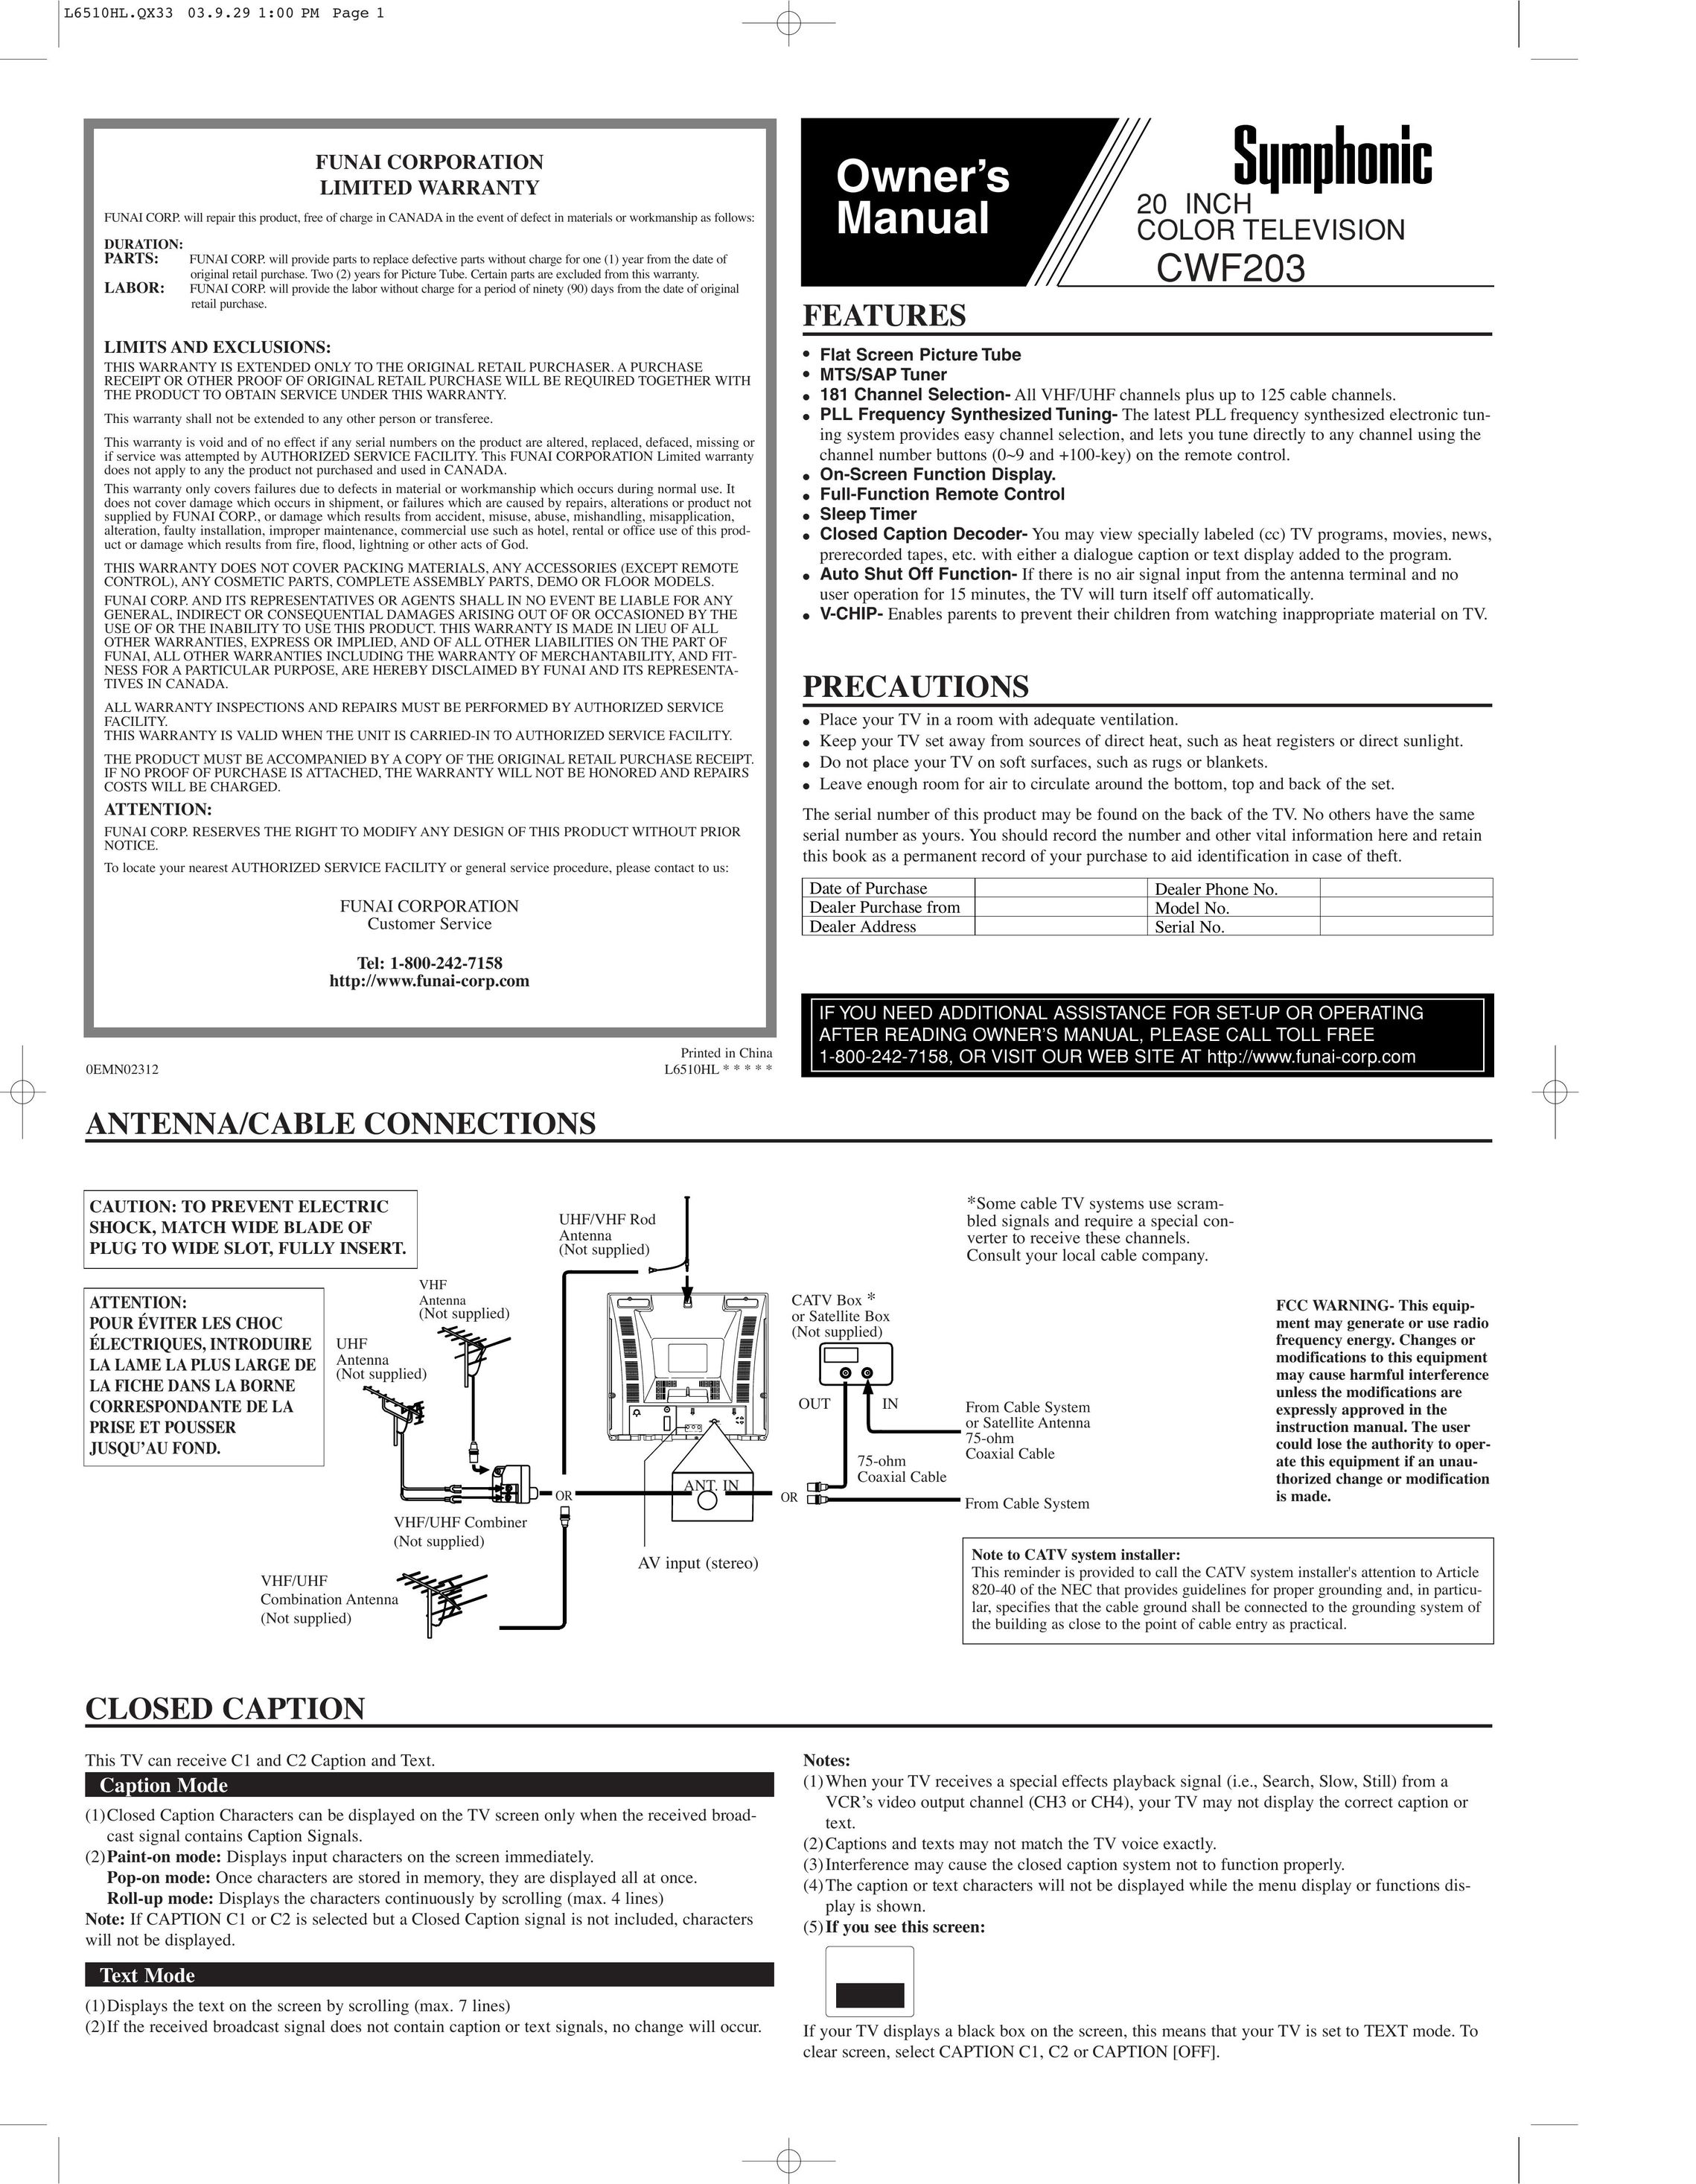 Symphonic CWF203 CRT Television User Manual